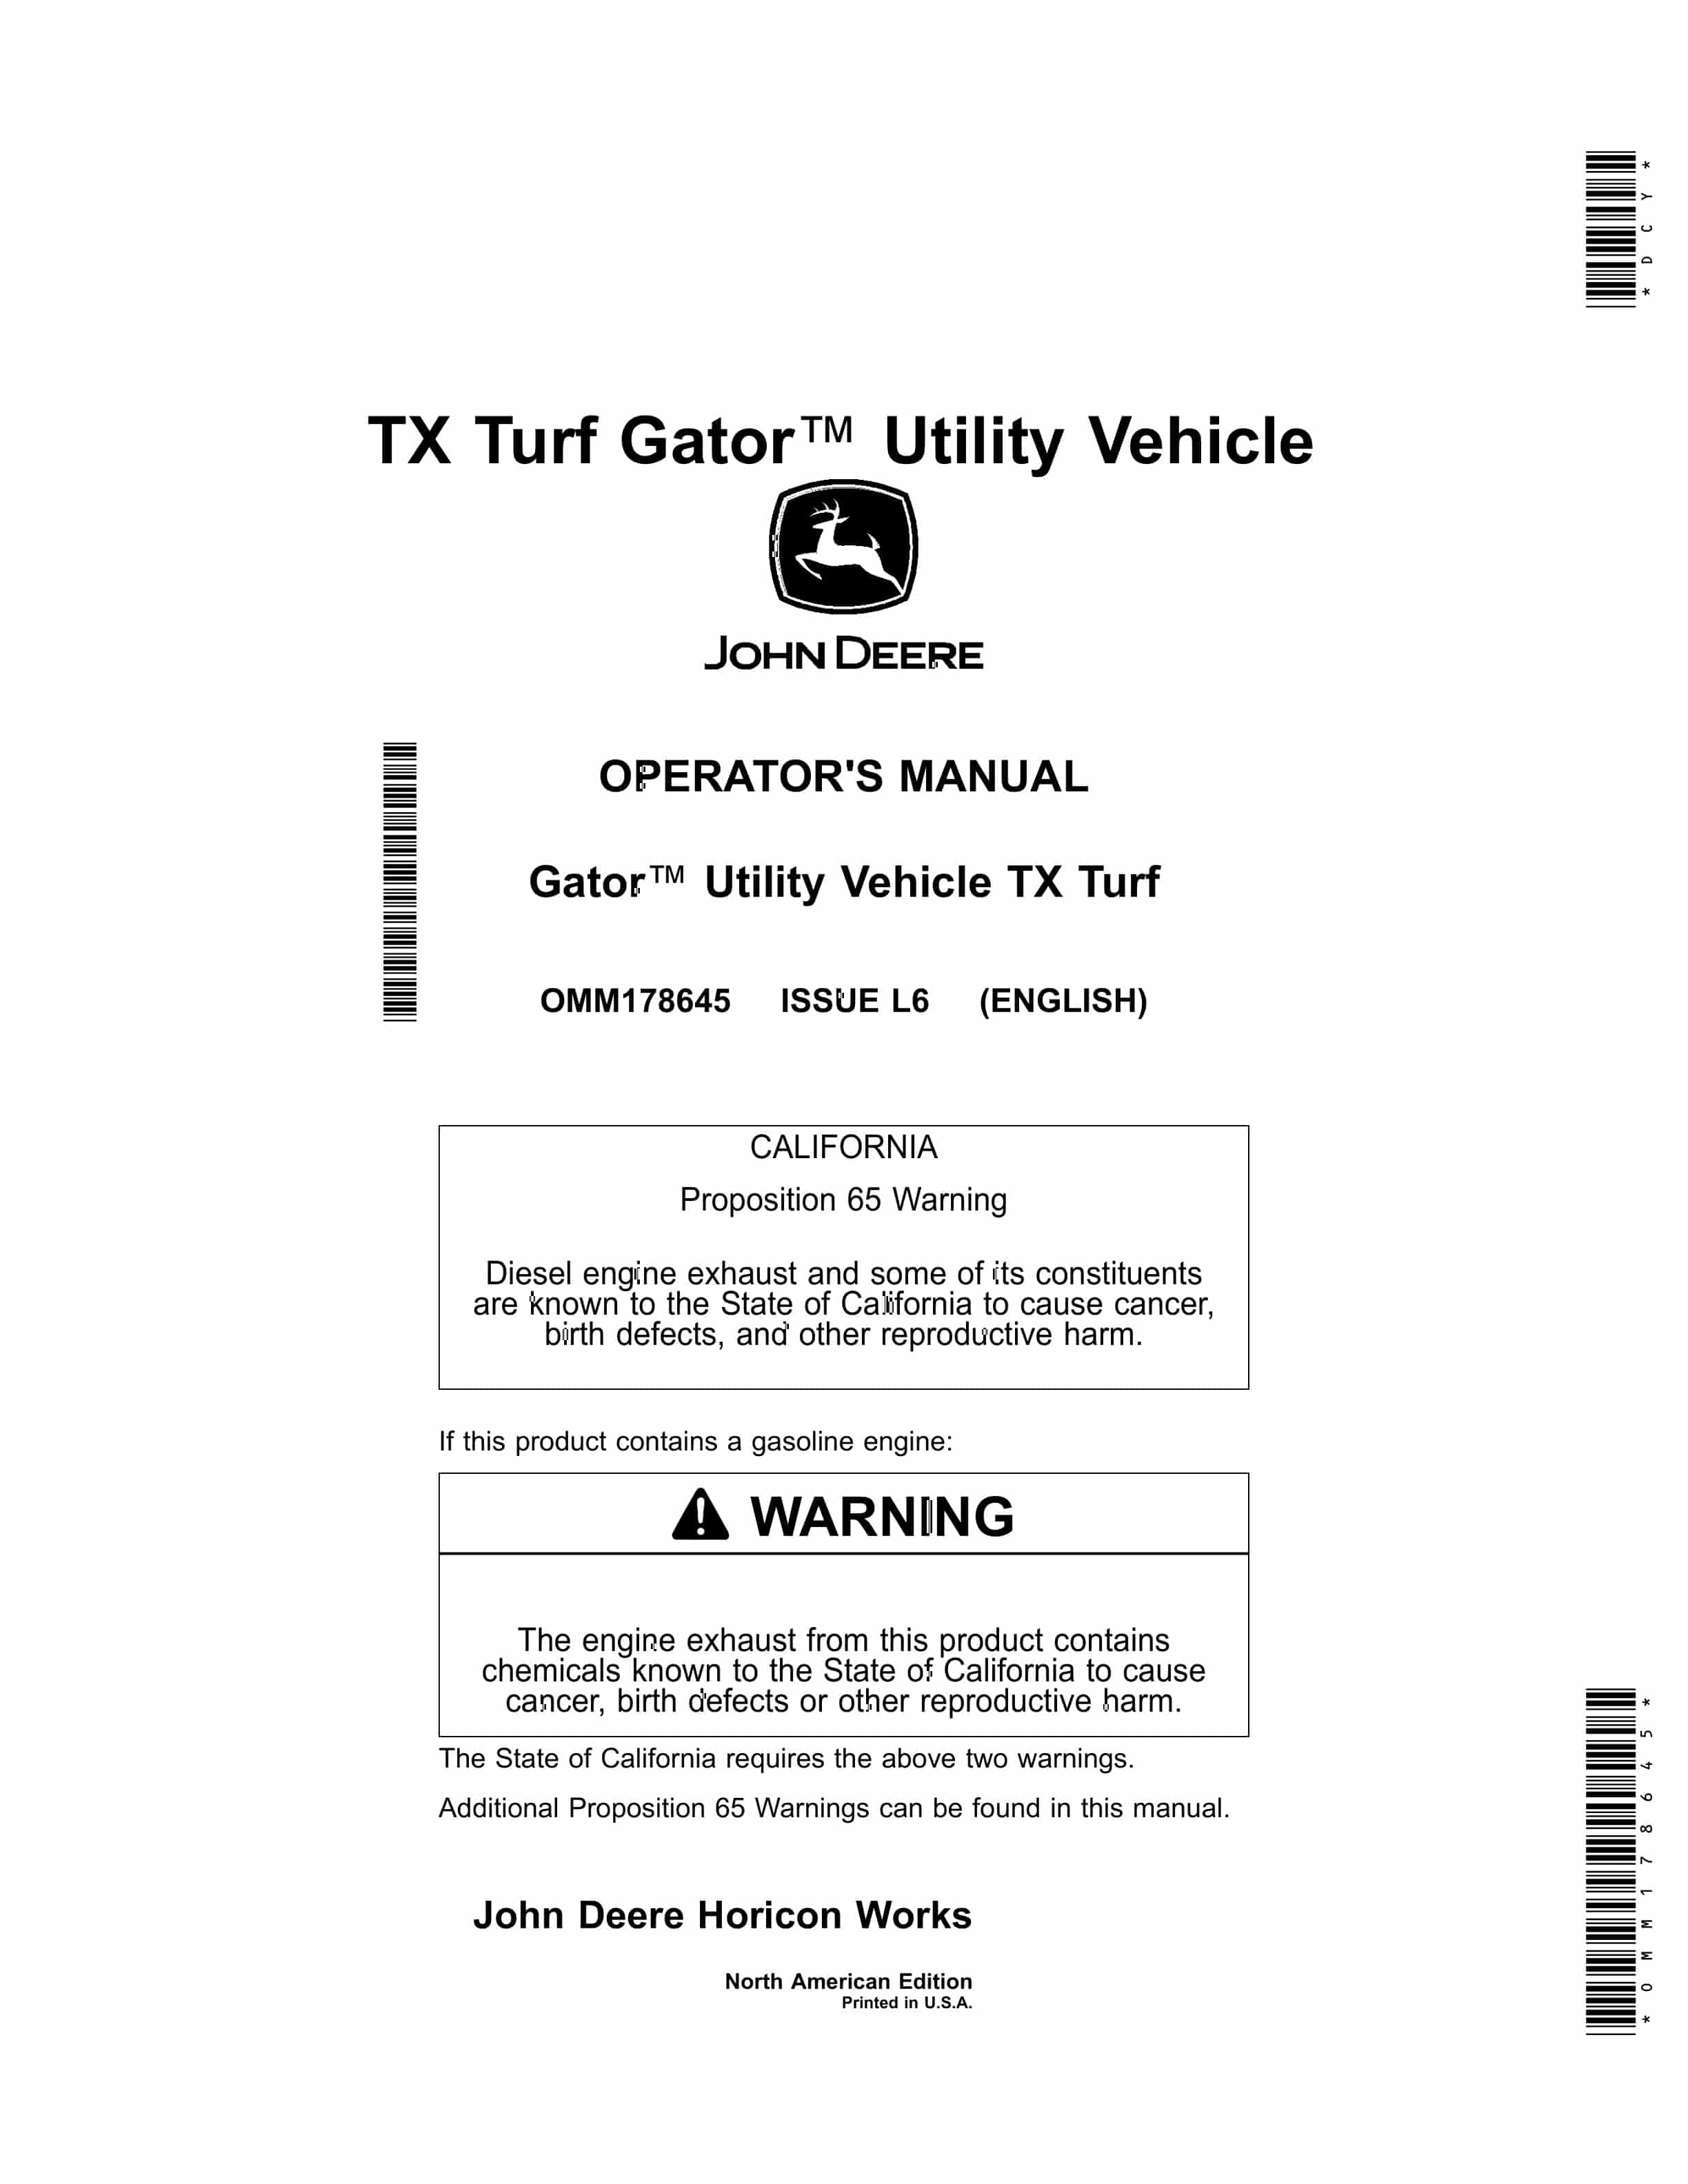 John Deere TX Turf Gator Utility Vehicles Operator Manual OMM178645 1